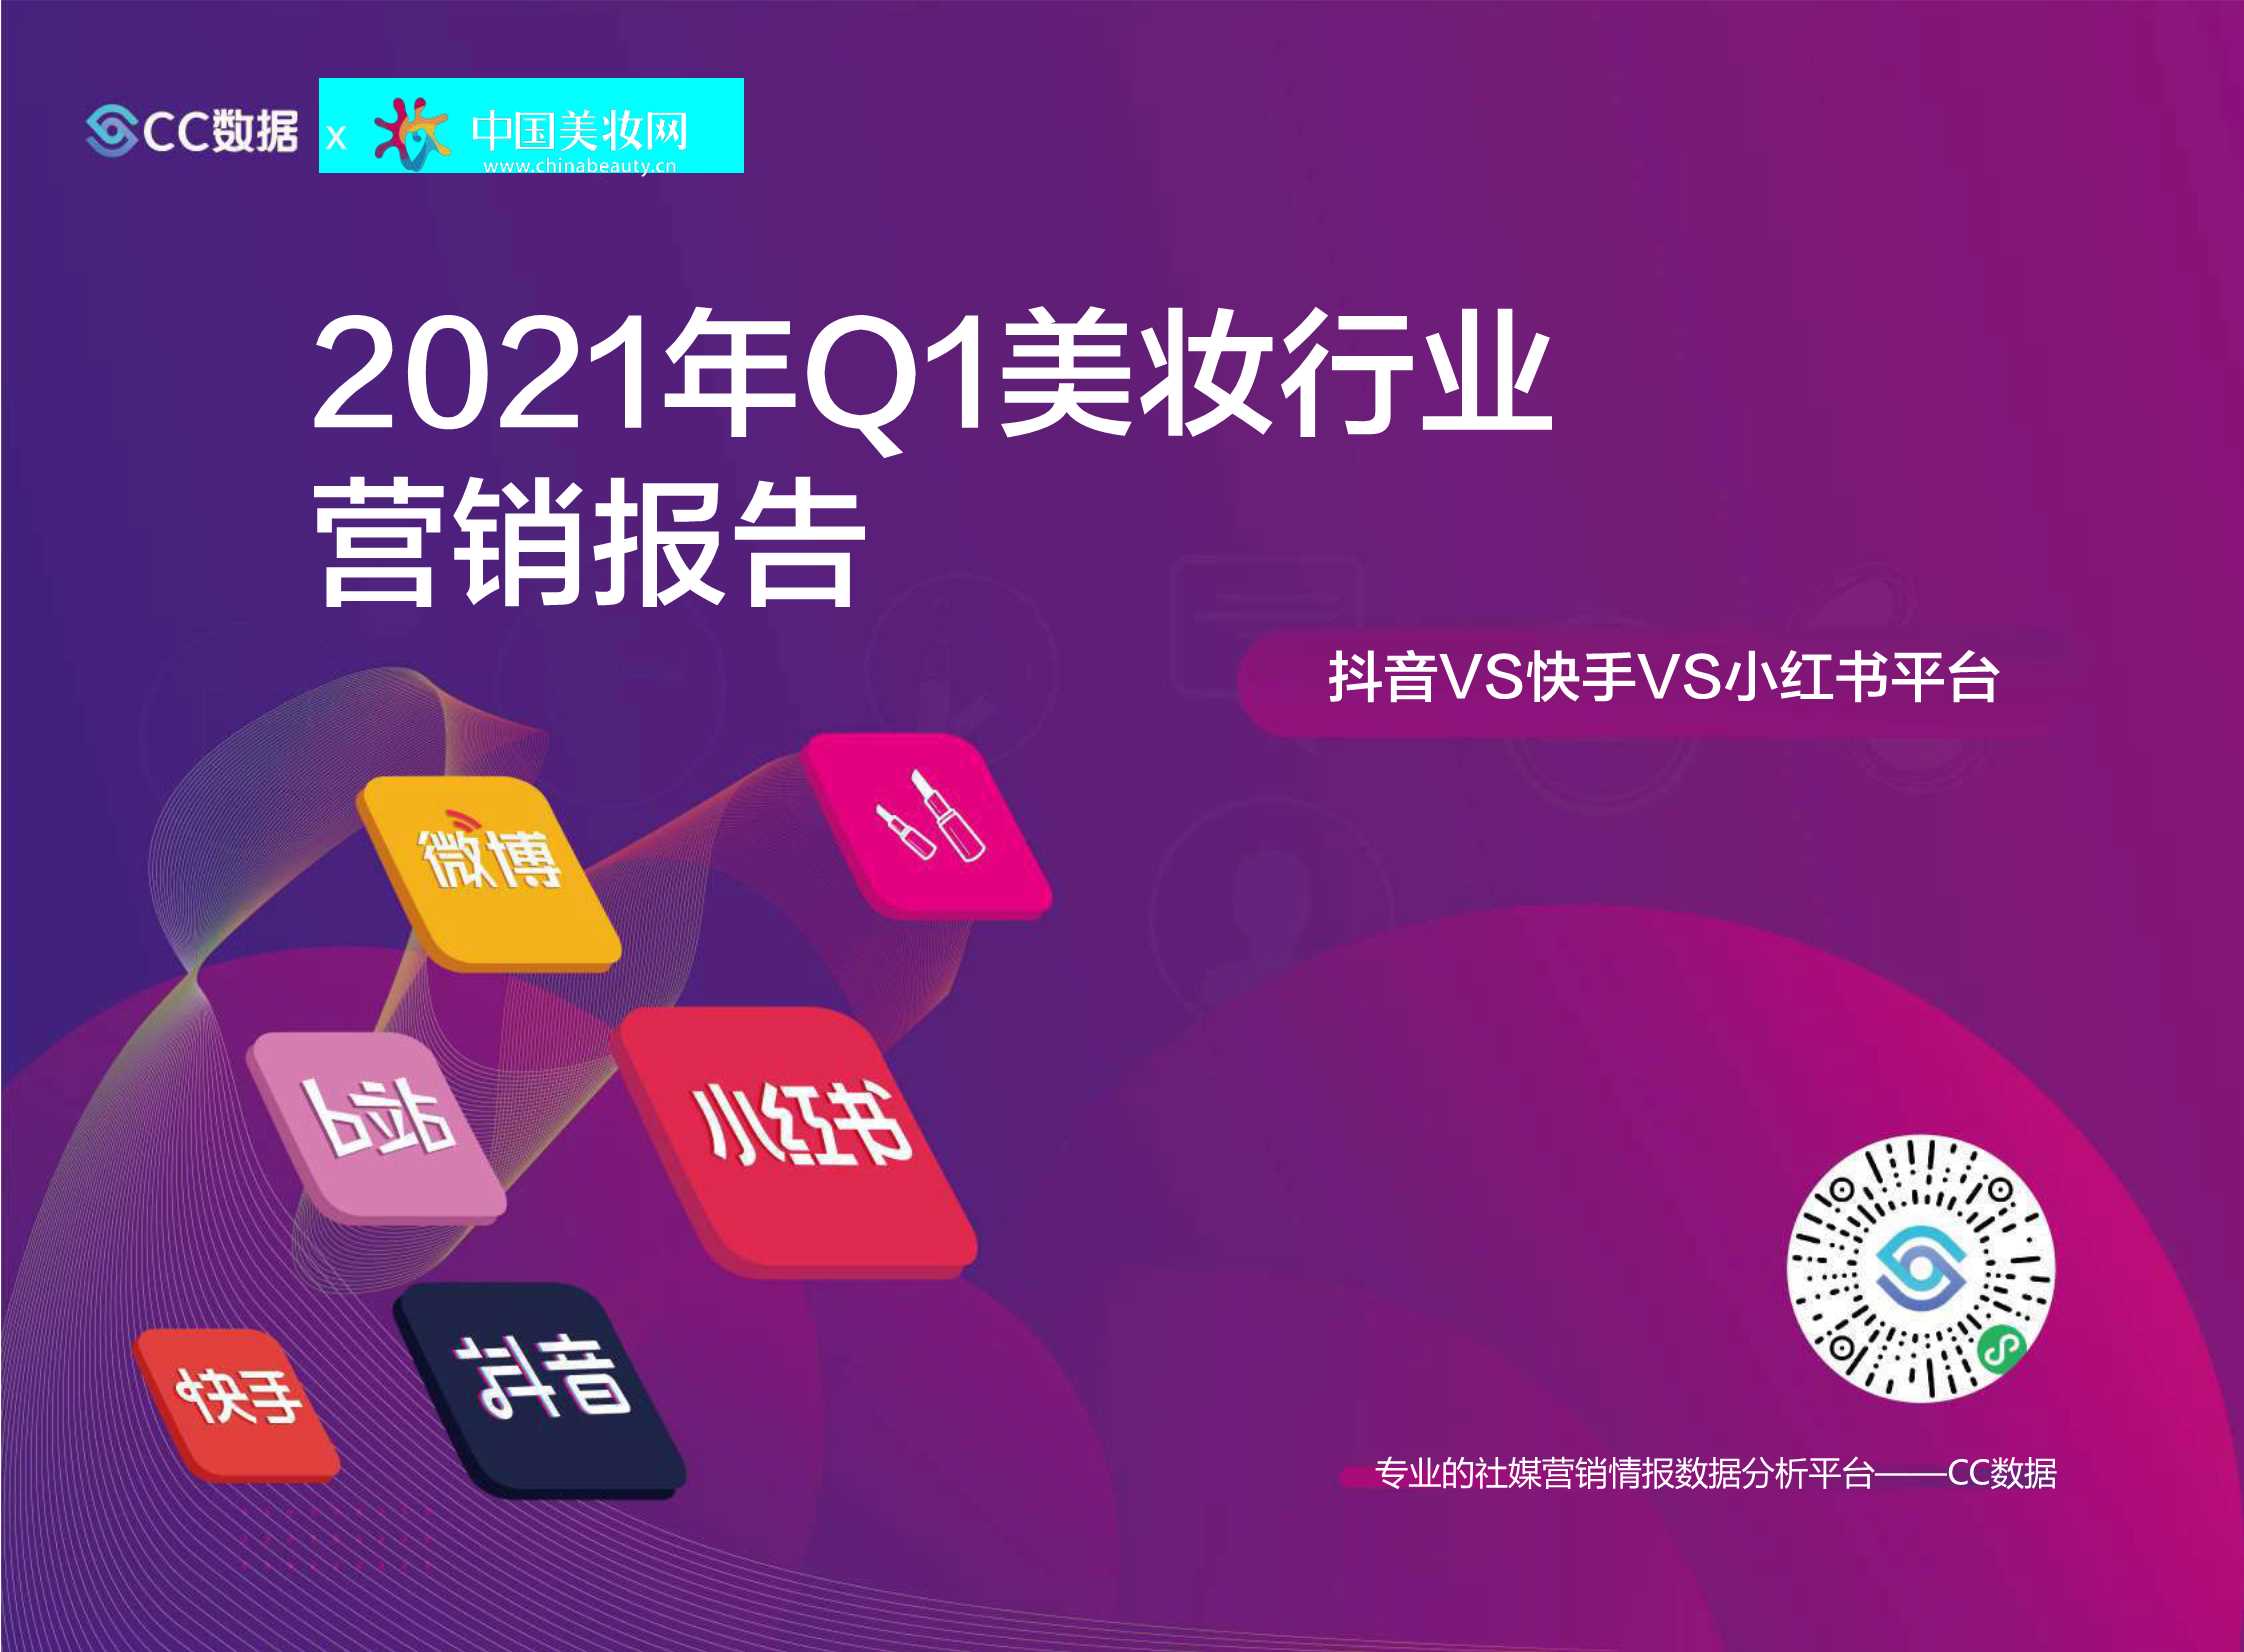 CC数据&中国美妆网-2021年Q1美妆行业营销报告-2021.04-28页